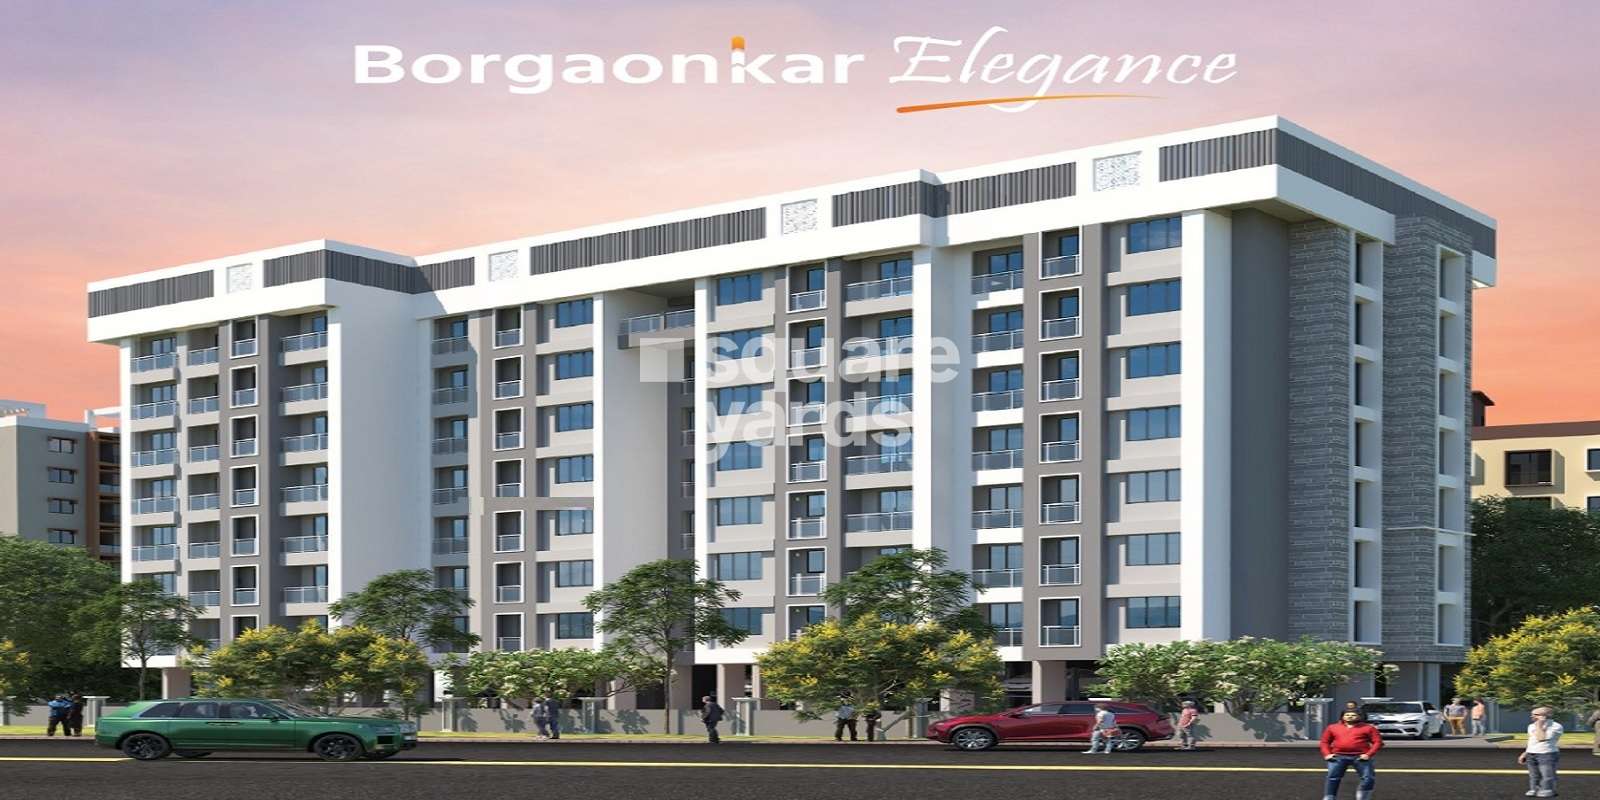 Borgaonkar Elegance Cover Image